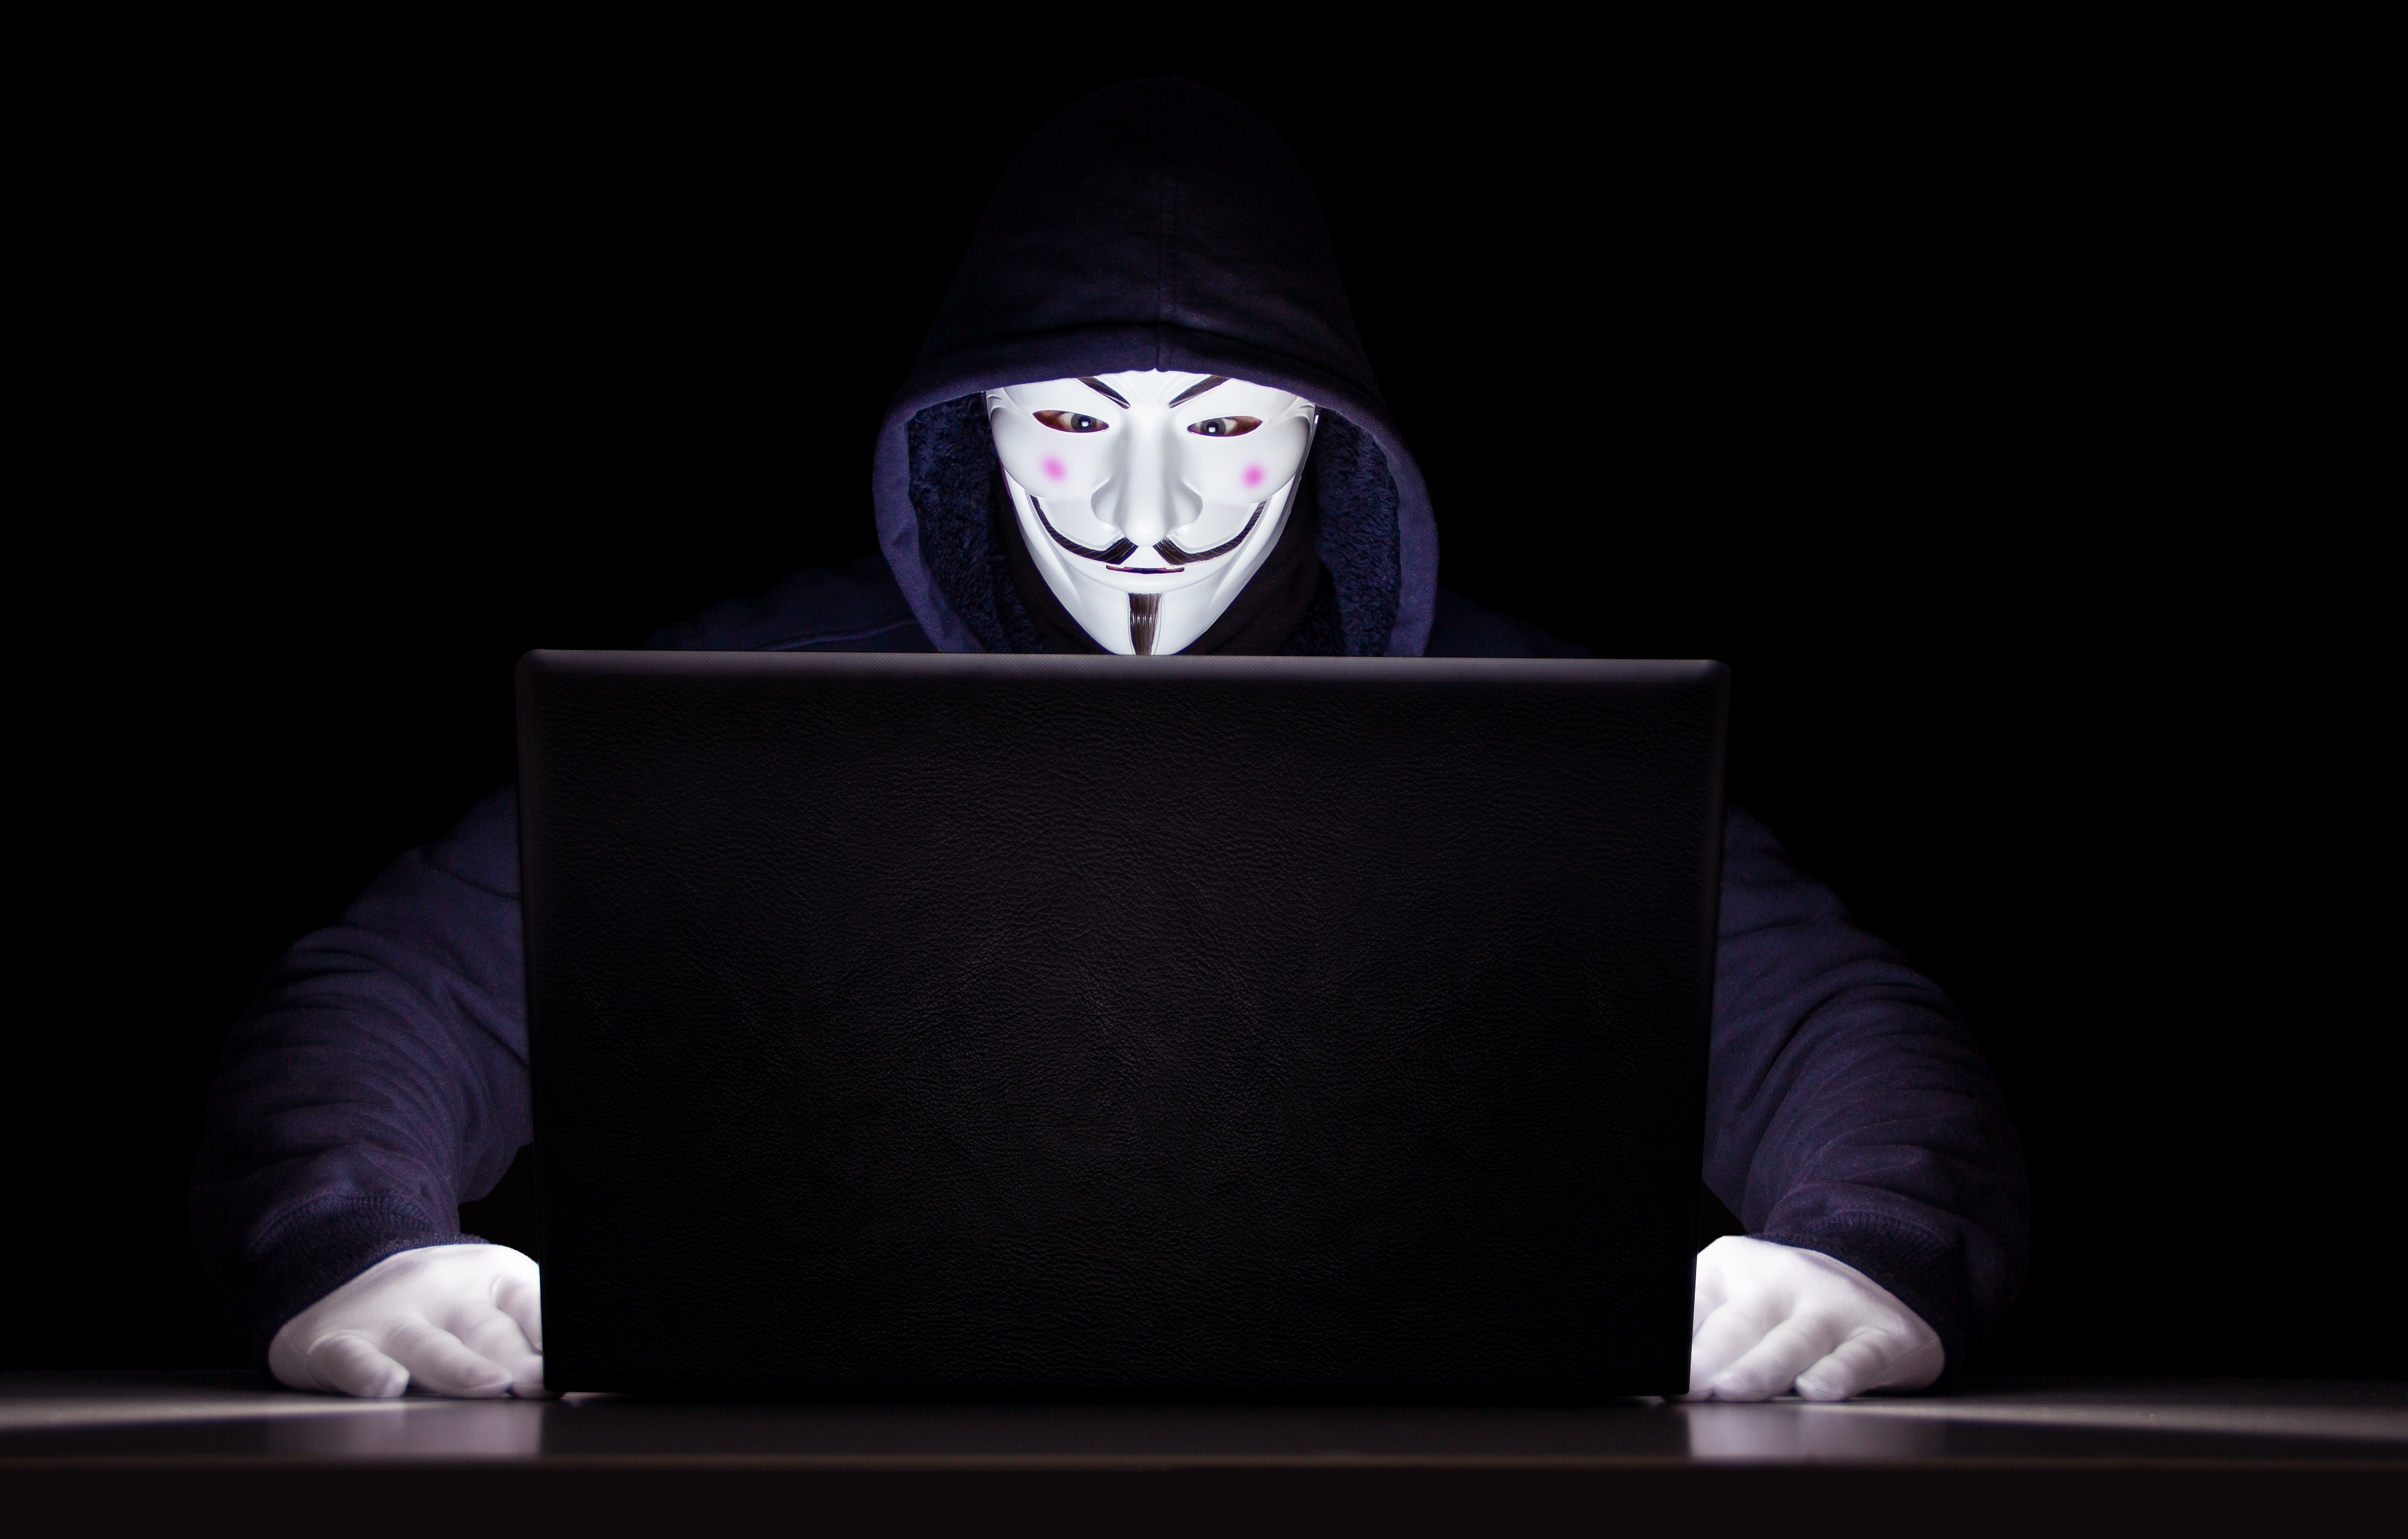 HD wallpaper, Black Background, 5K, Laptop, Hacker, Anonymous, Hacking